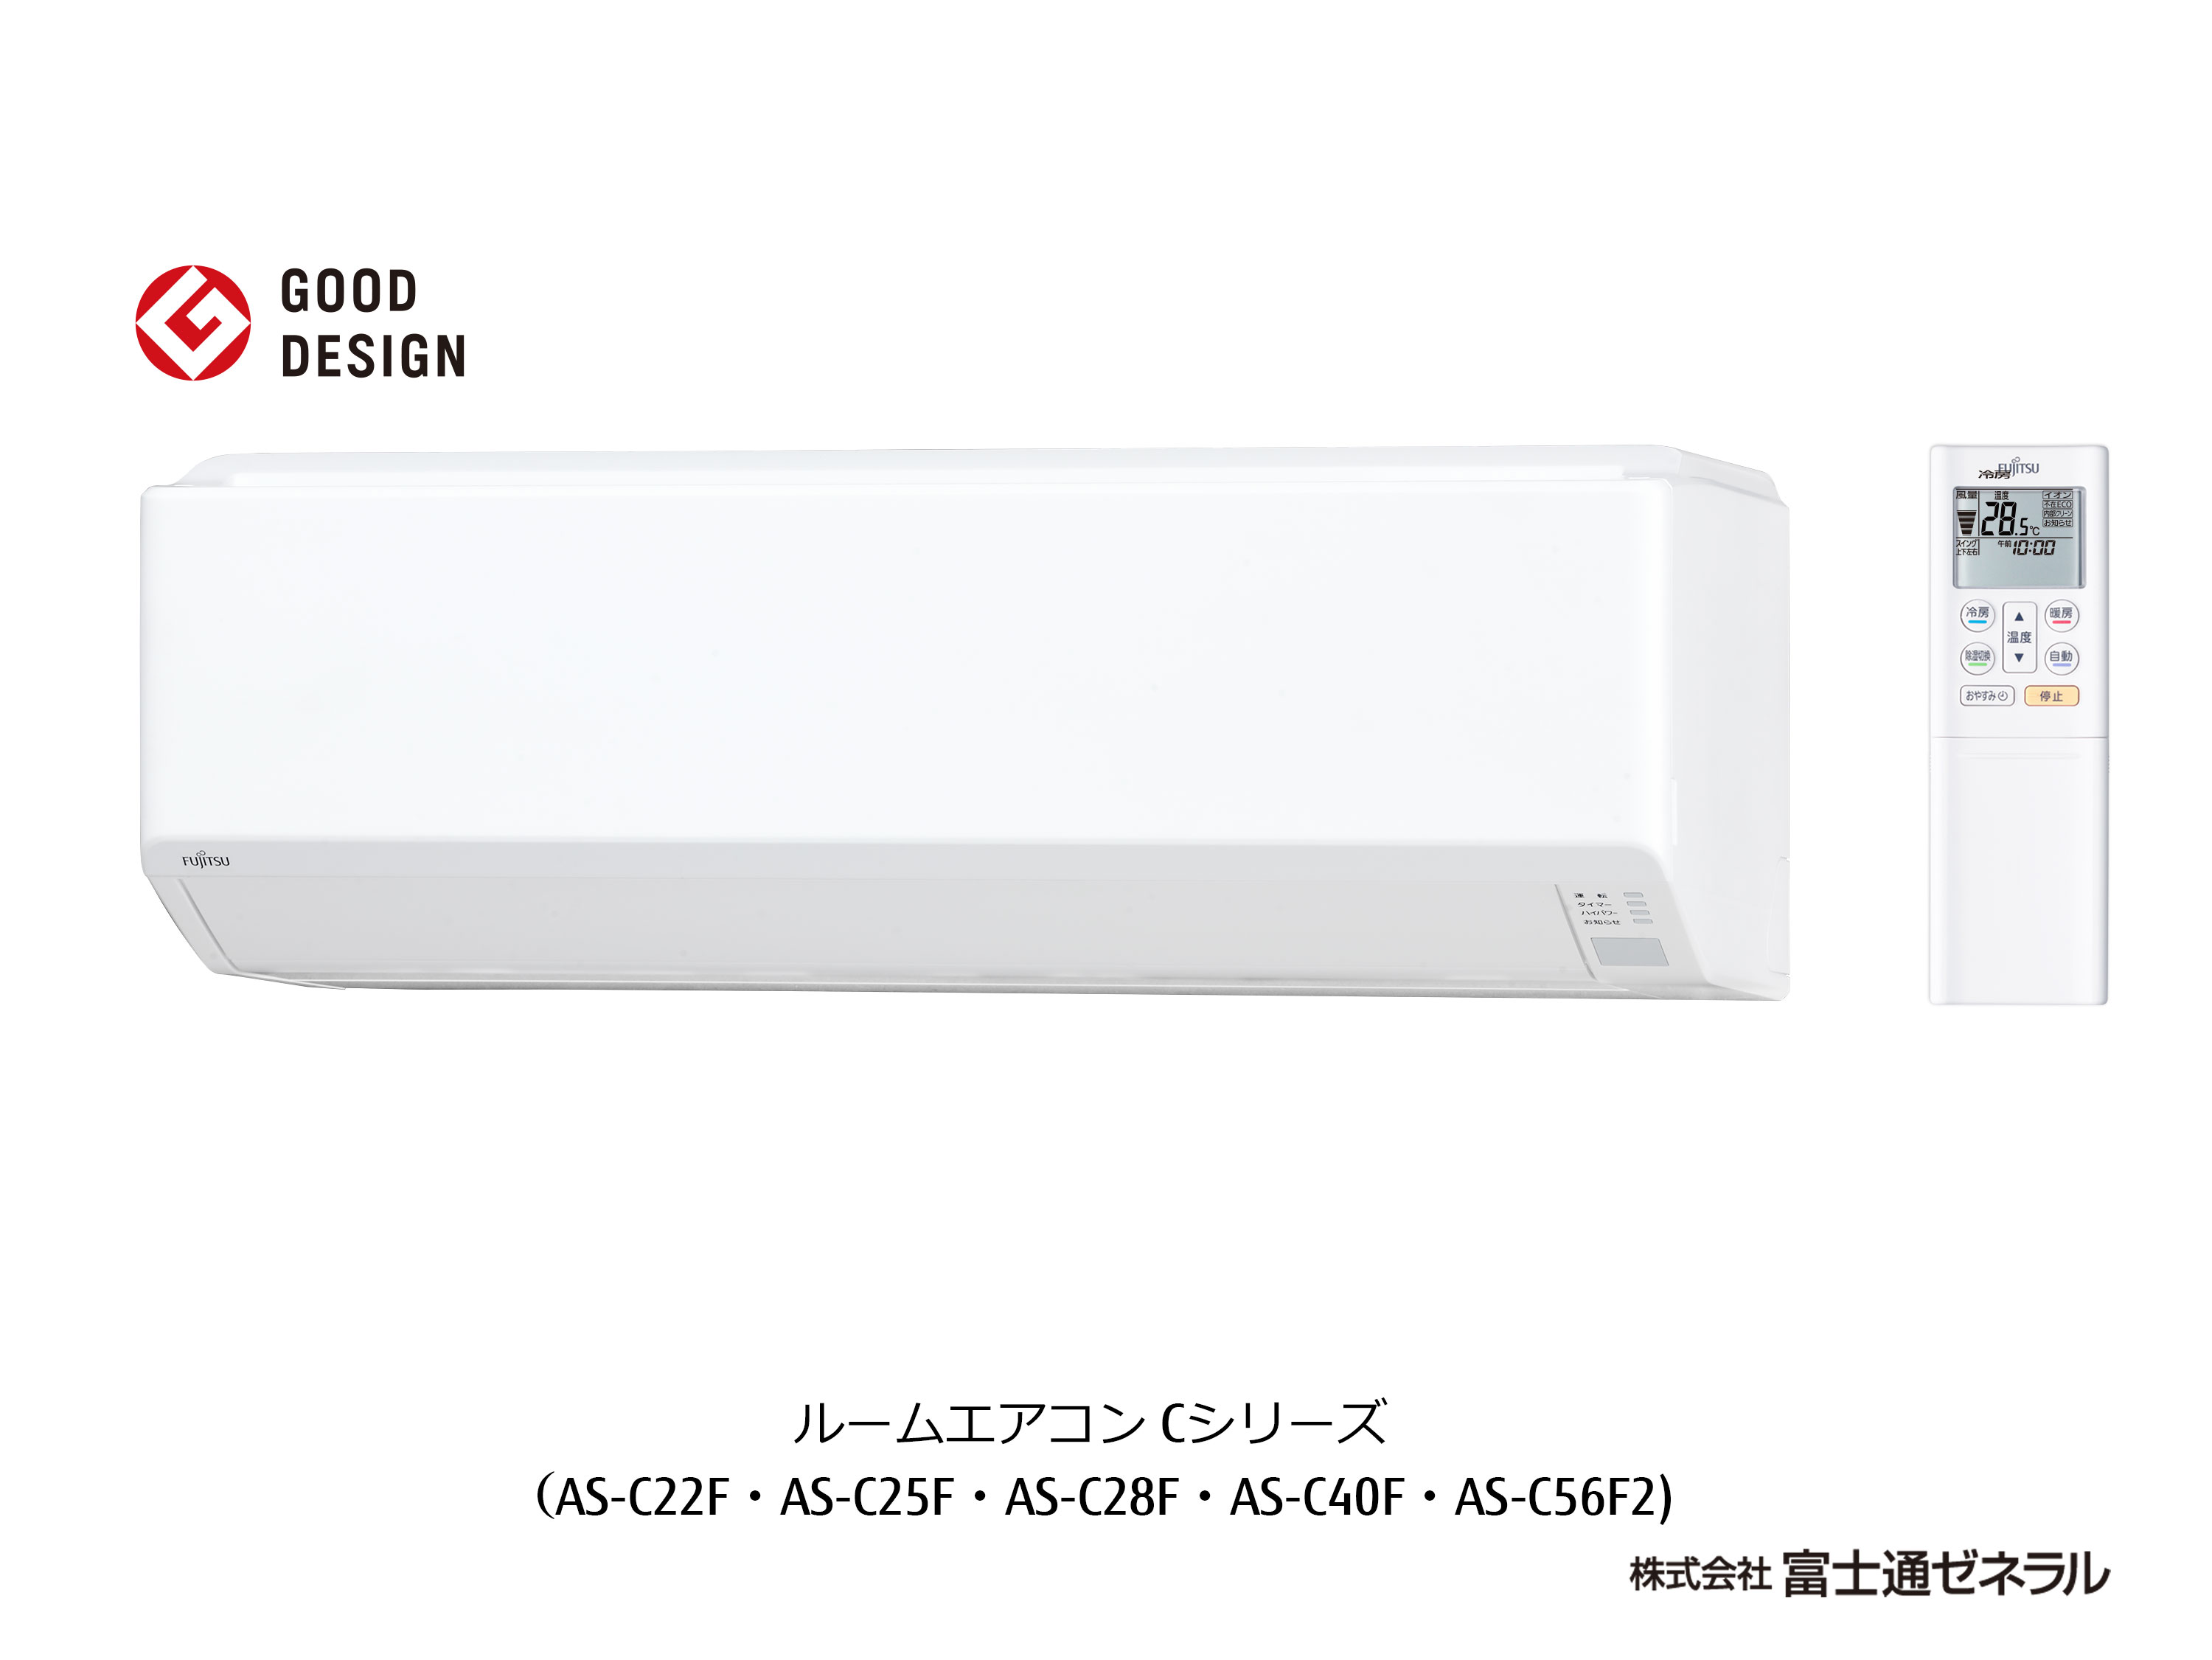 AS-C56F2 概要 2016年 エアコン Cシリーズ - 富士通ゼネラル JP